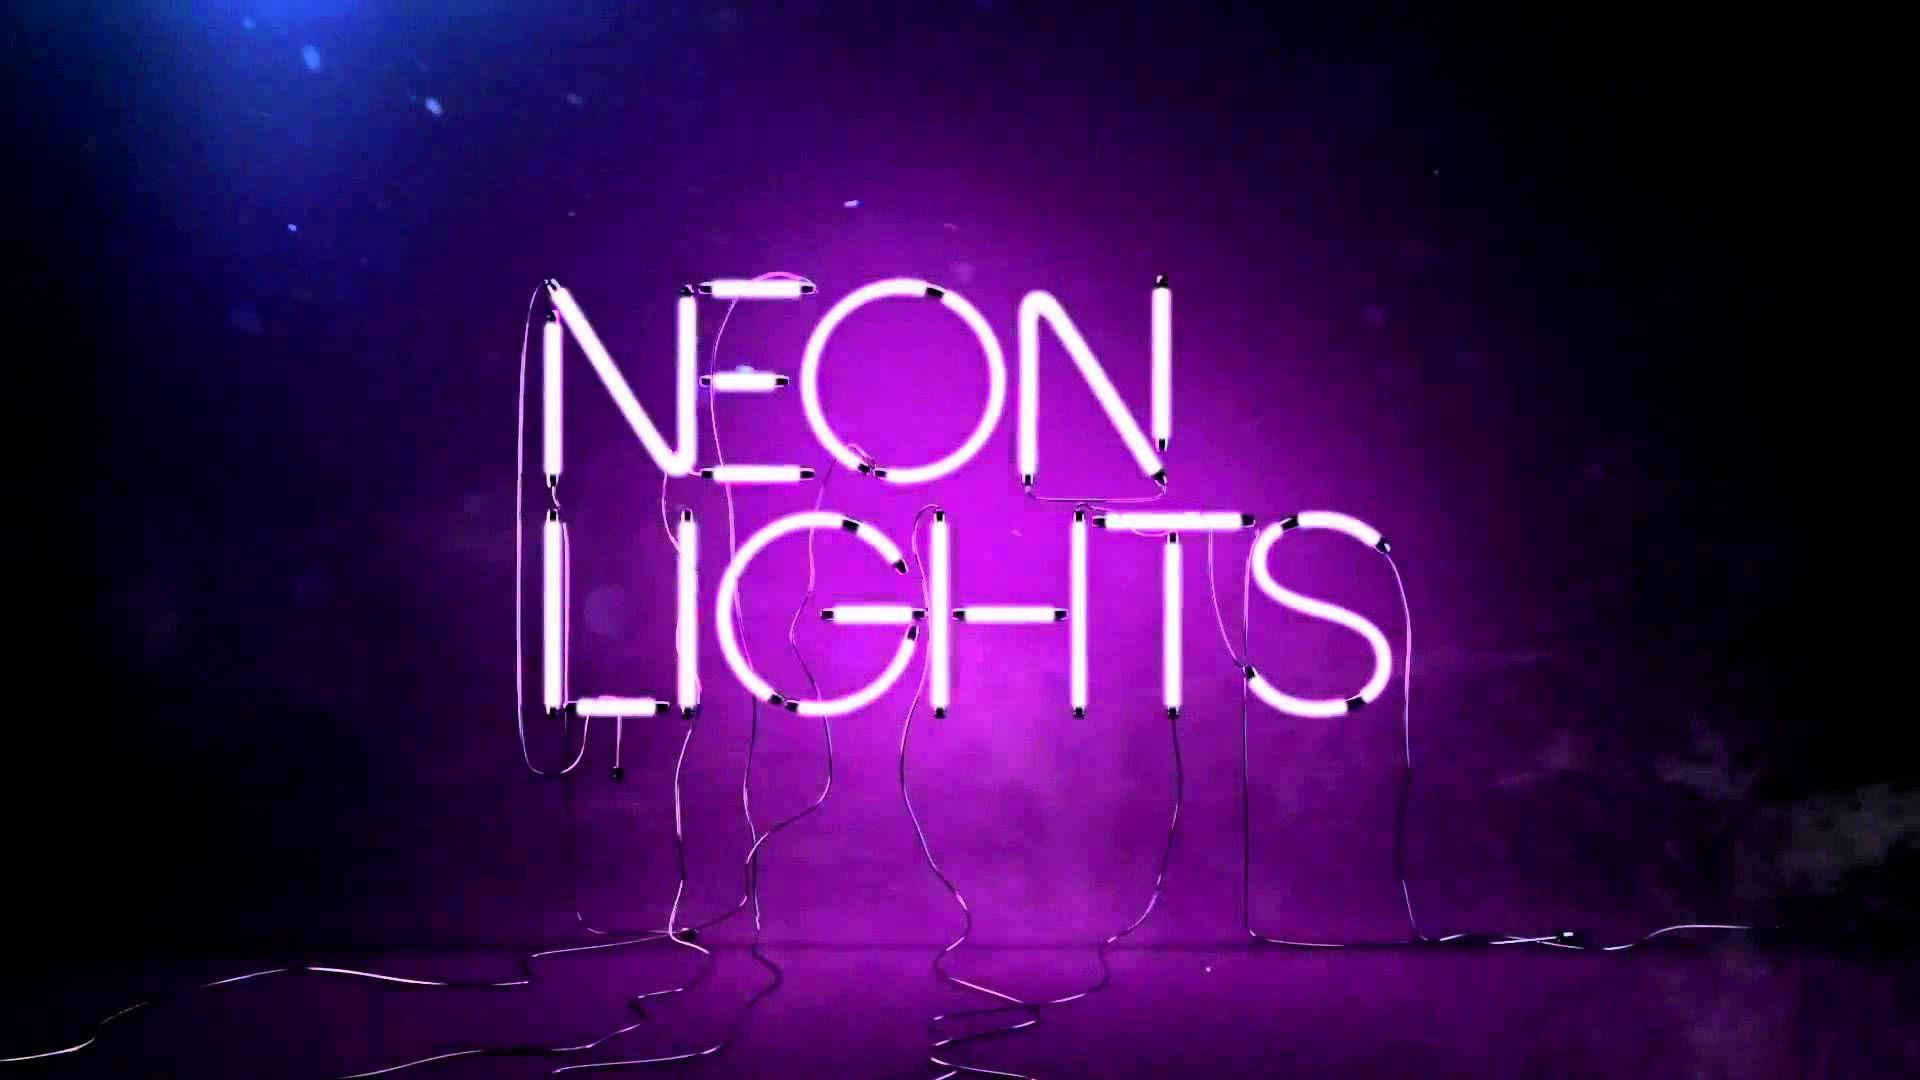 nice Neon Lights Guitar Desktop Background. AmazingPict.com